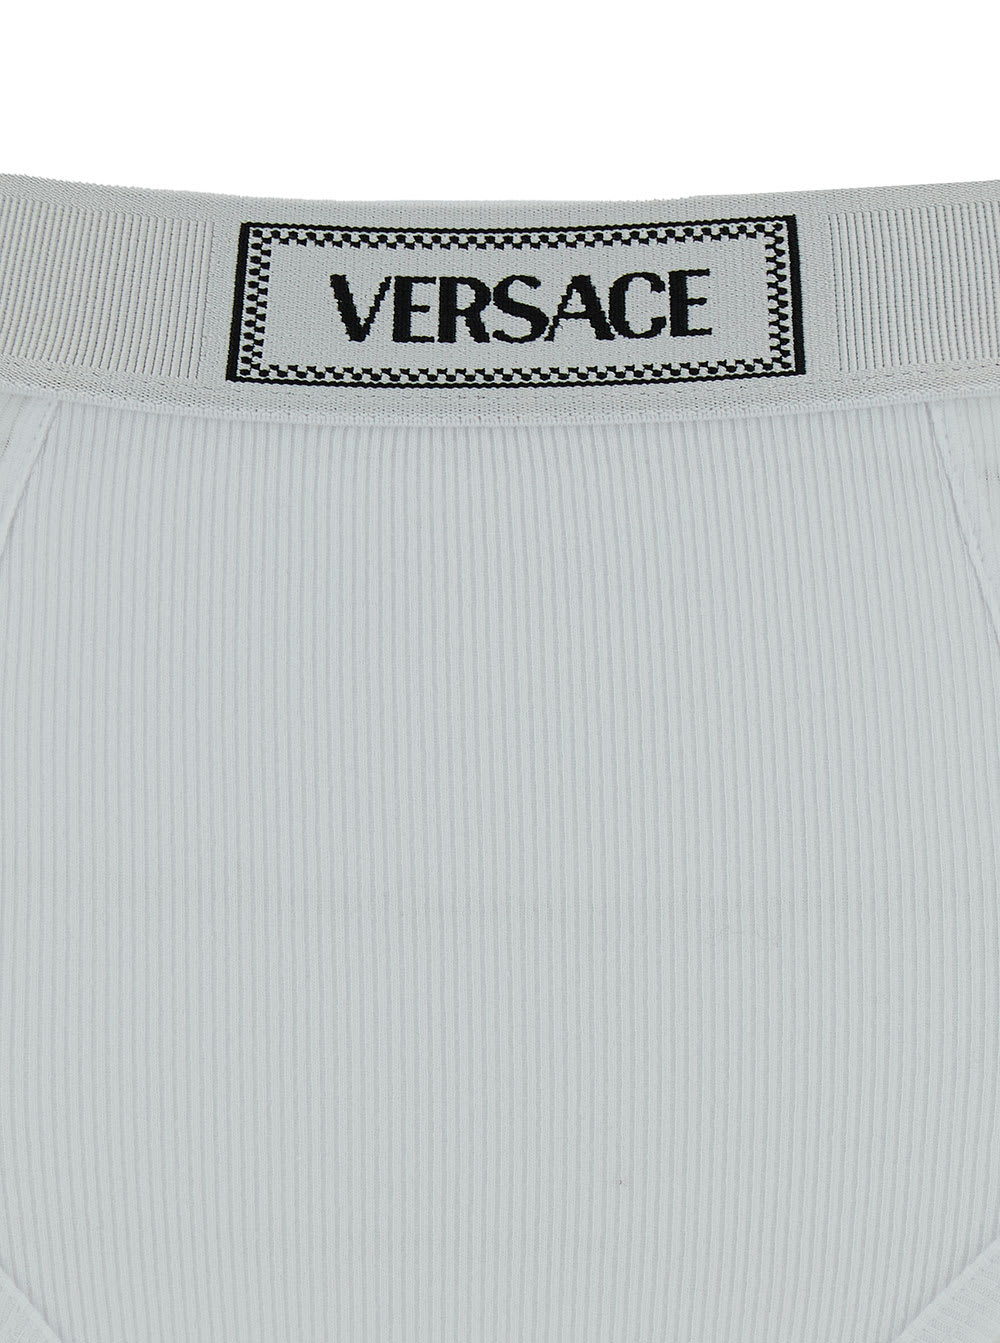 Ribbed cotton high rise briefs - Versace - Women